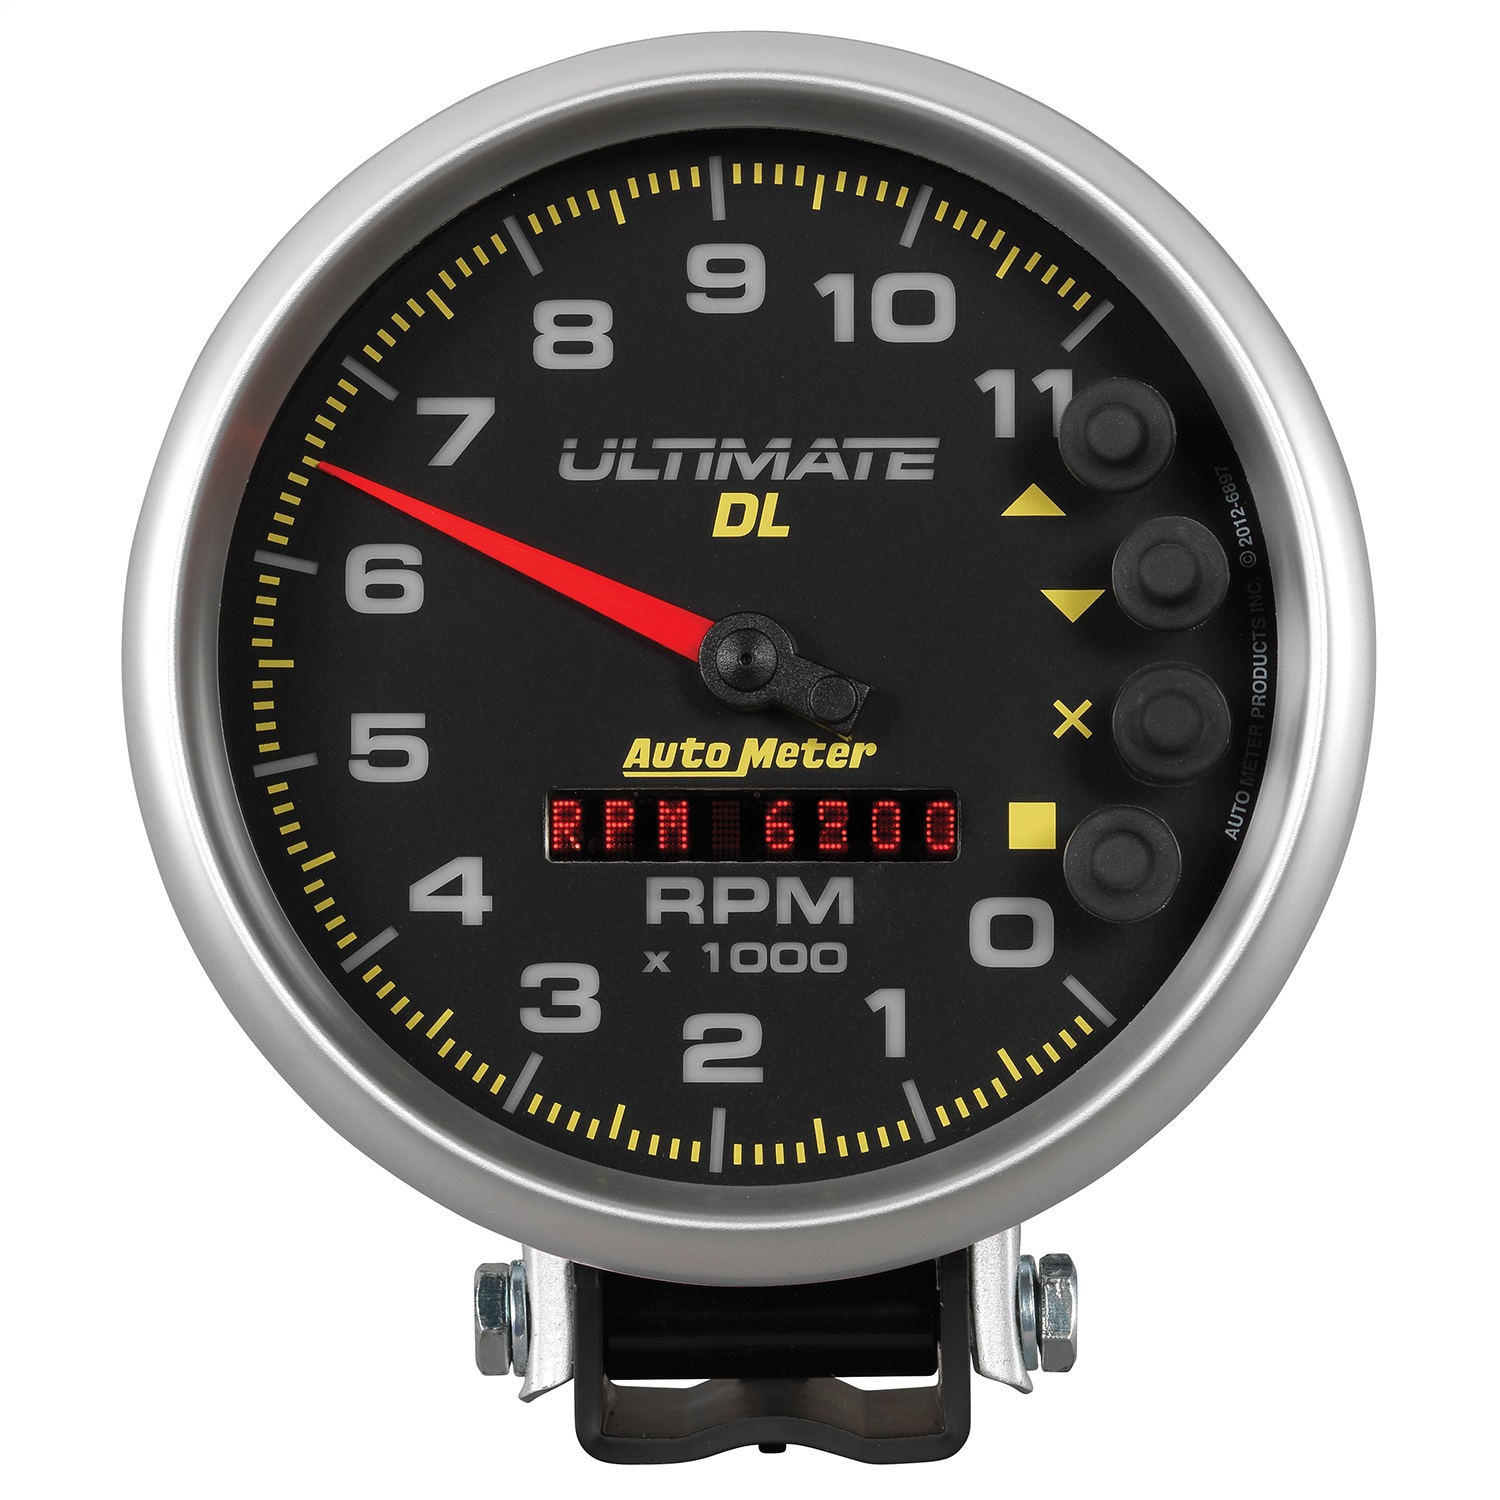 Auto Meter Auto Meter 6895 Ultimate DL Playback Tachometer